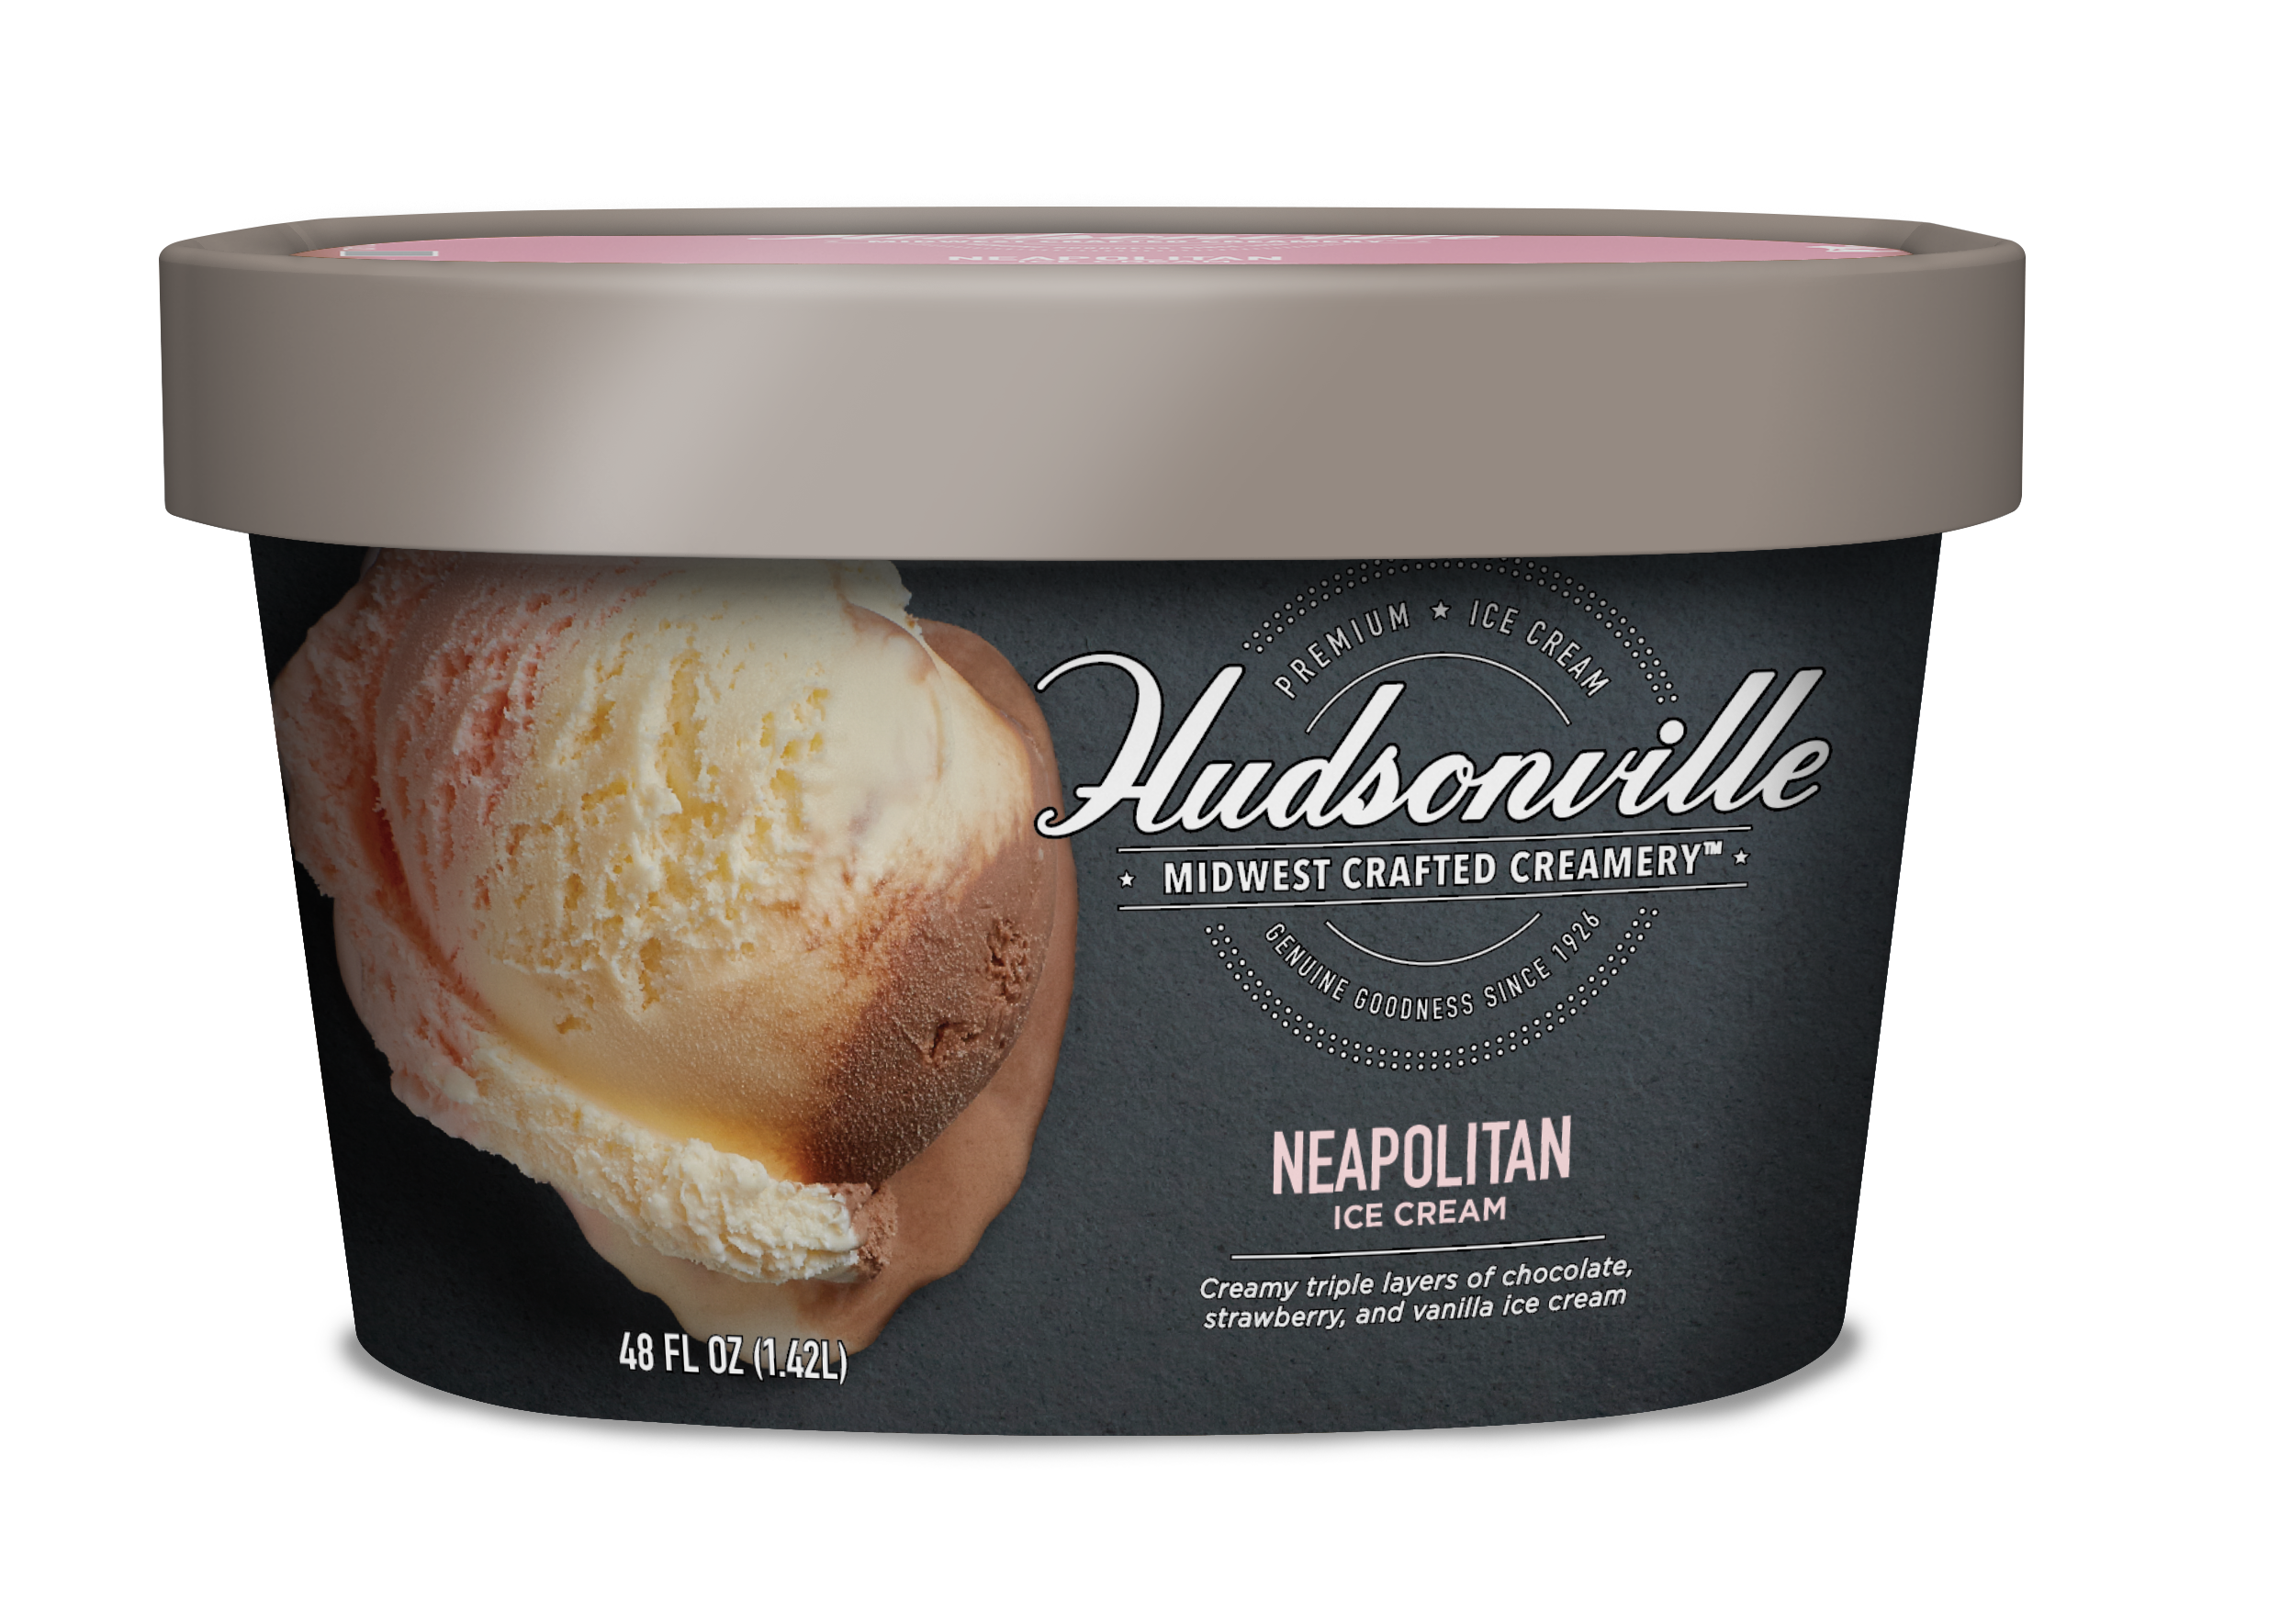 Hudsonville Ice Cream: Neapolitan